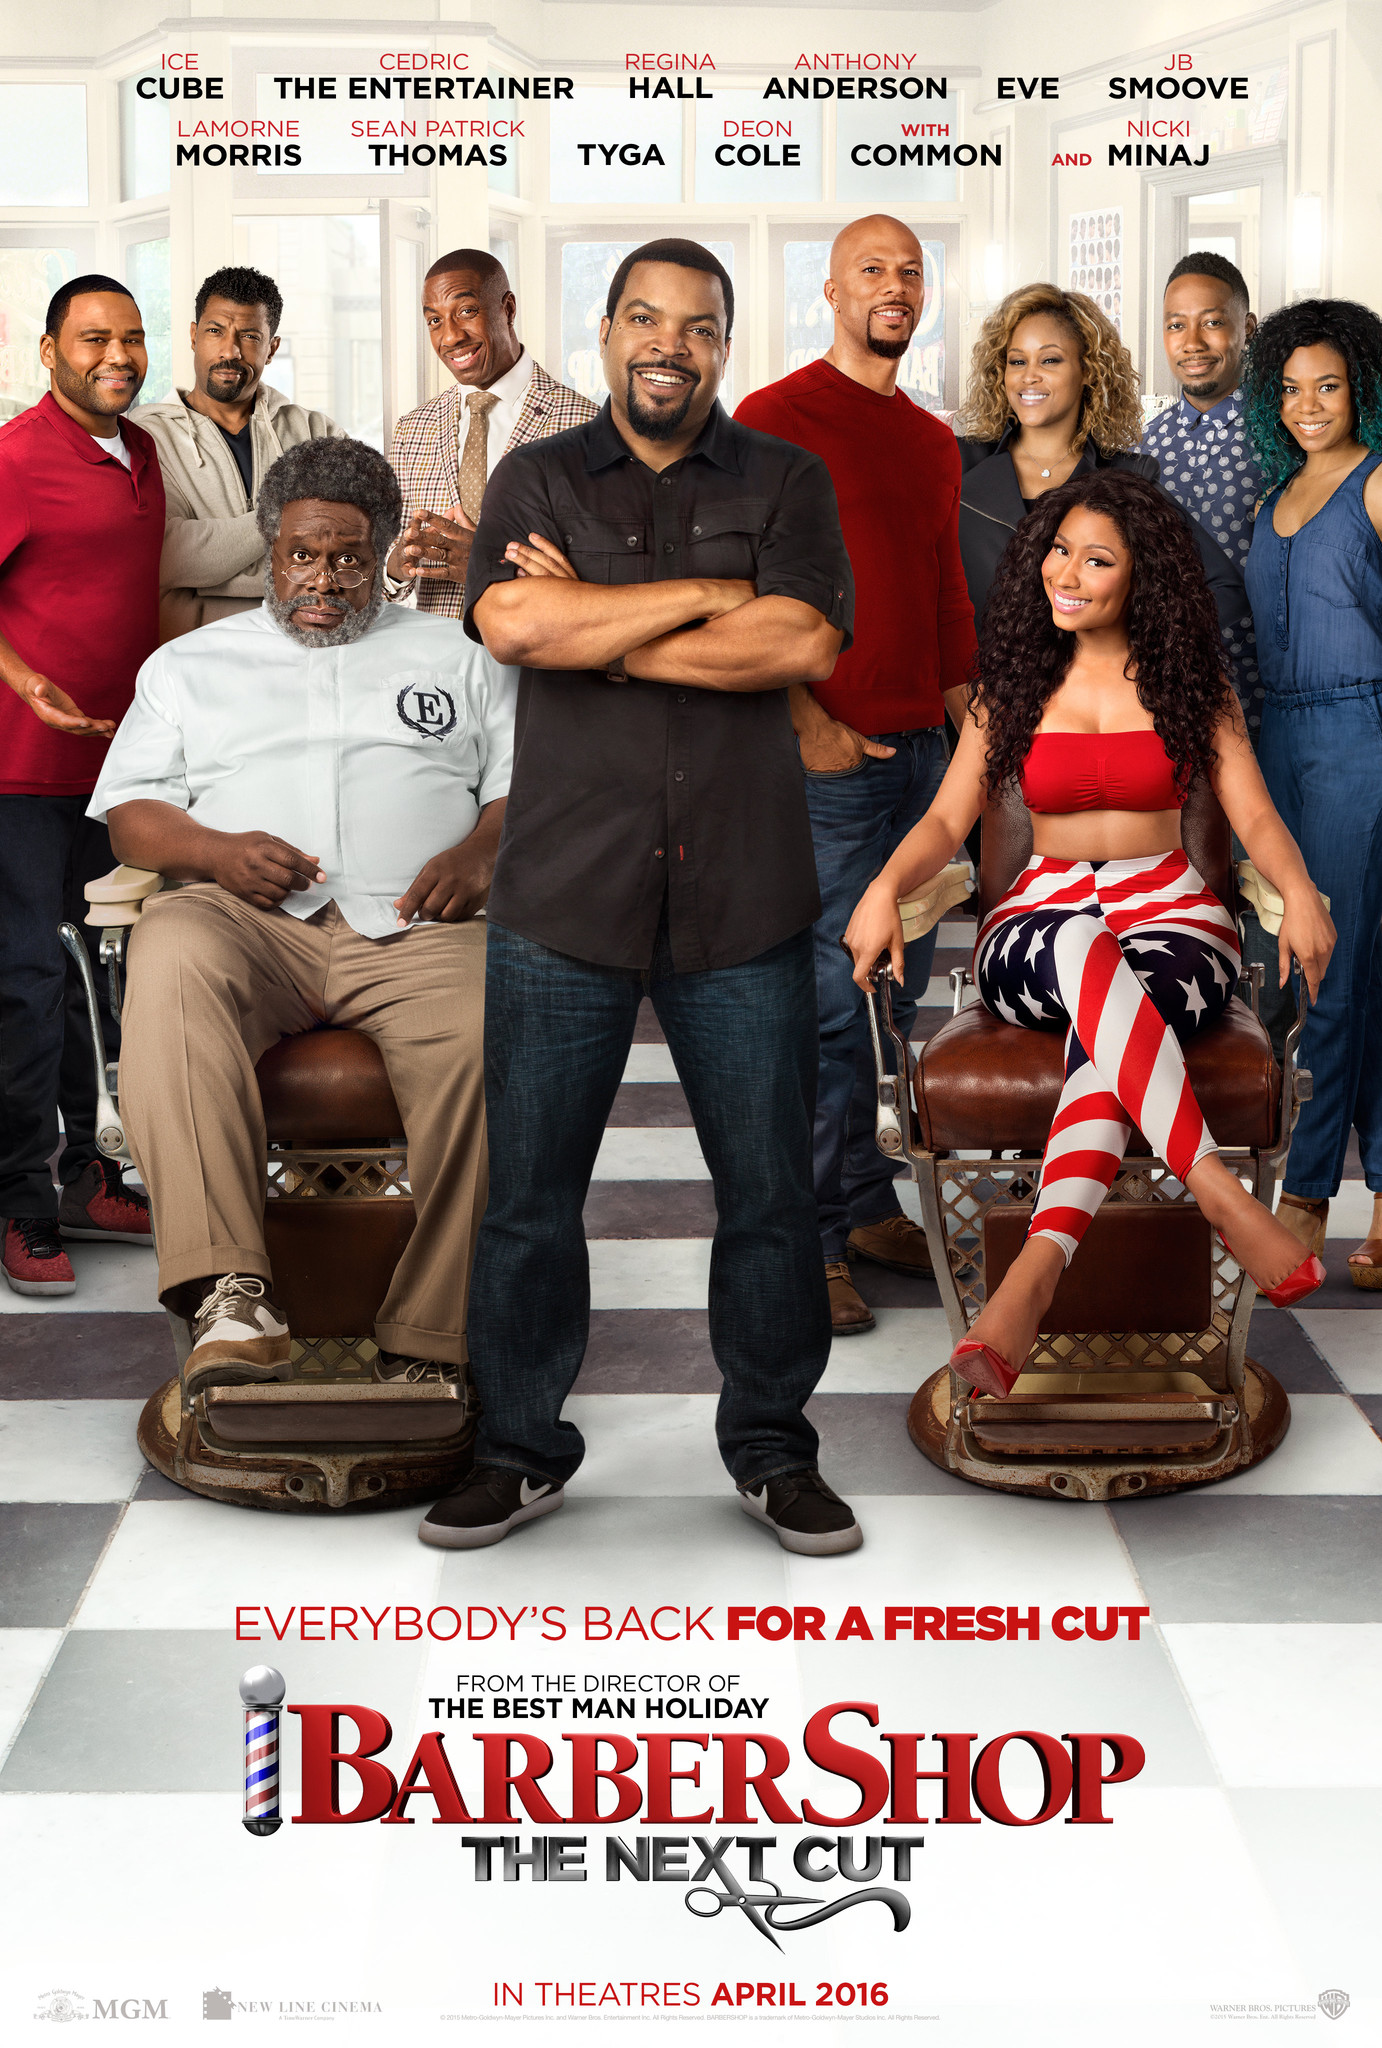 Nonton film Barbershop The Next Cut layarkaca21 indoxx1 ganool online streaming terbaru